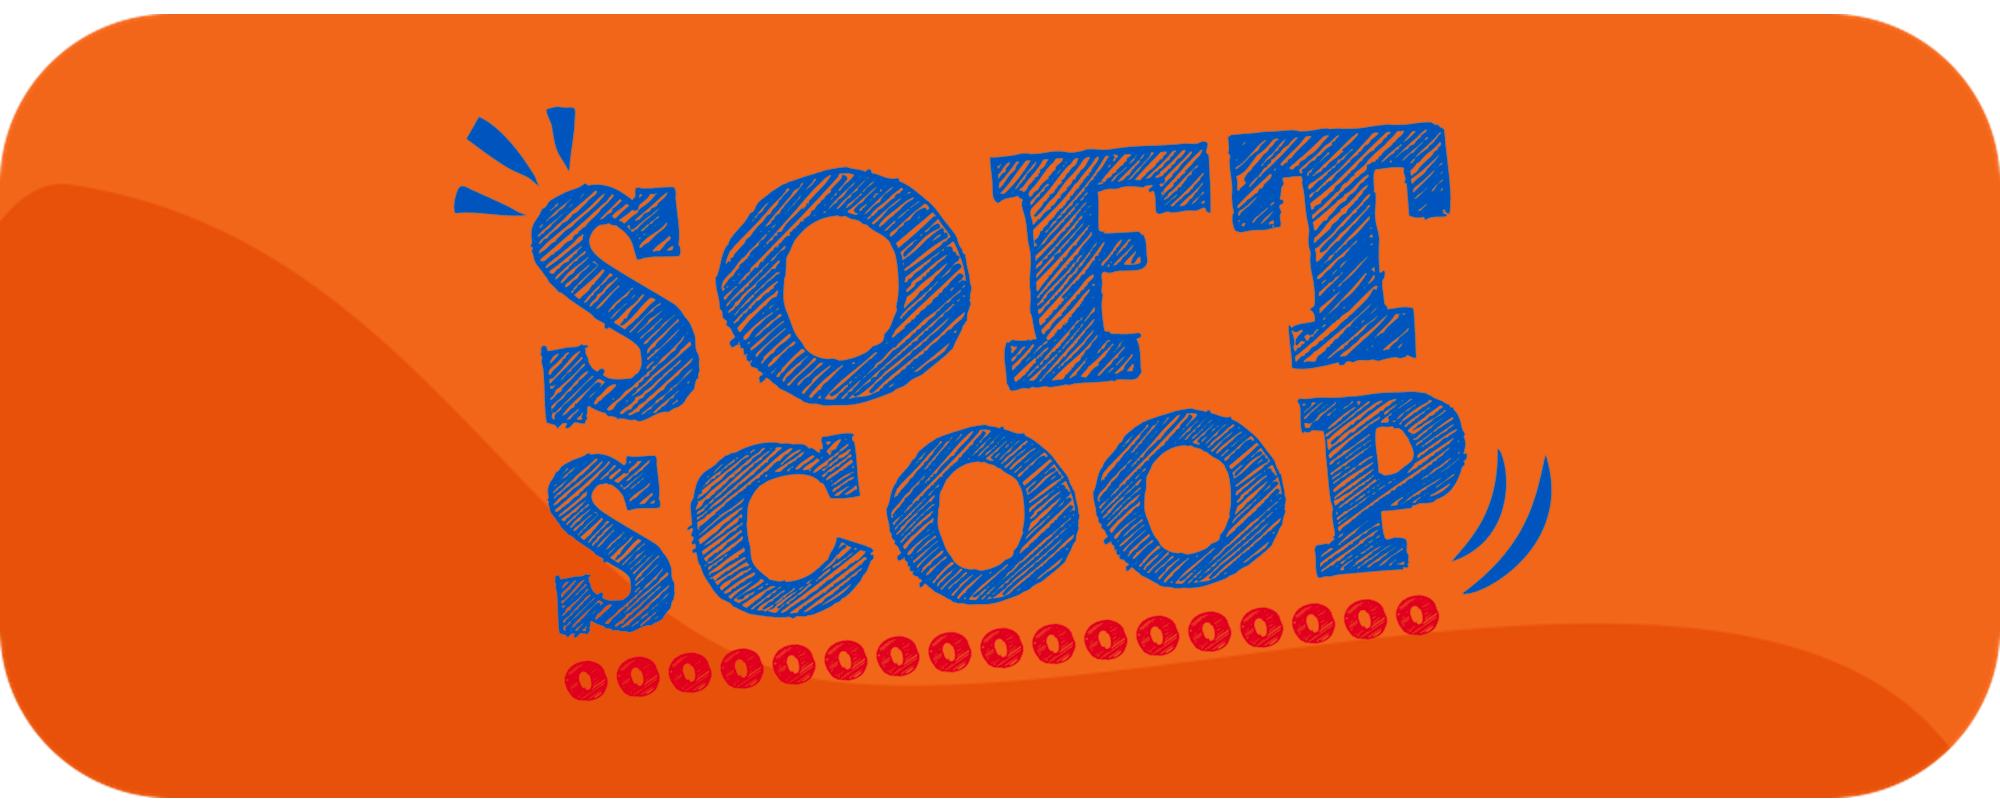 Soft Scoop logo